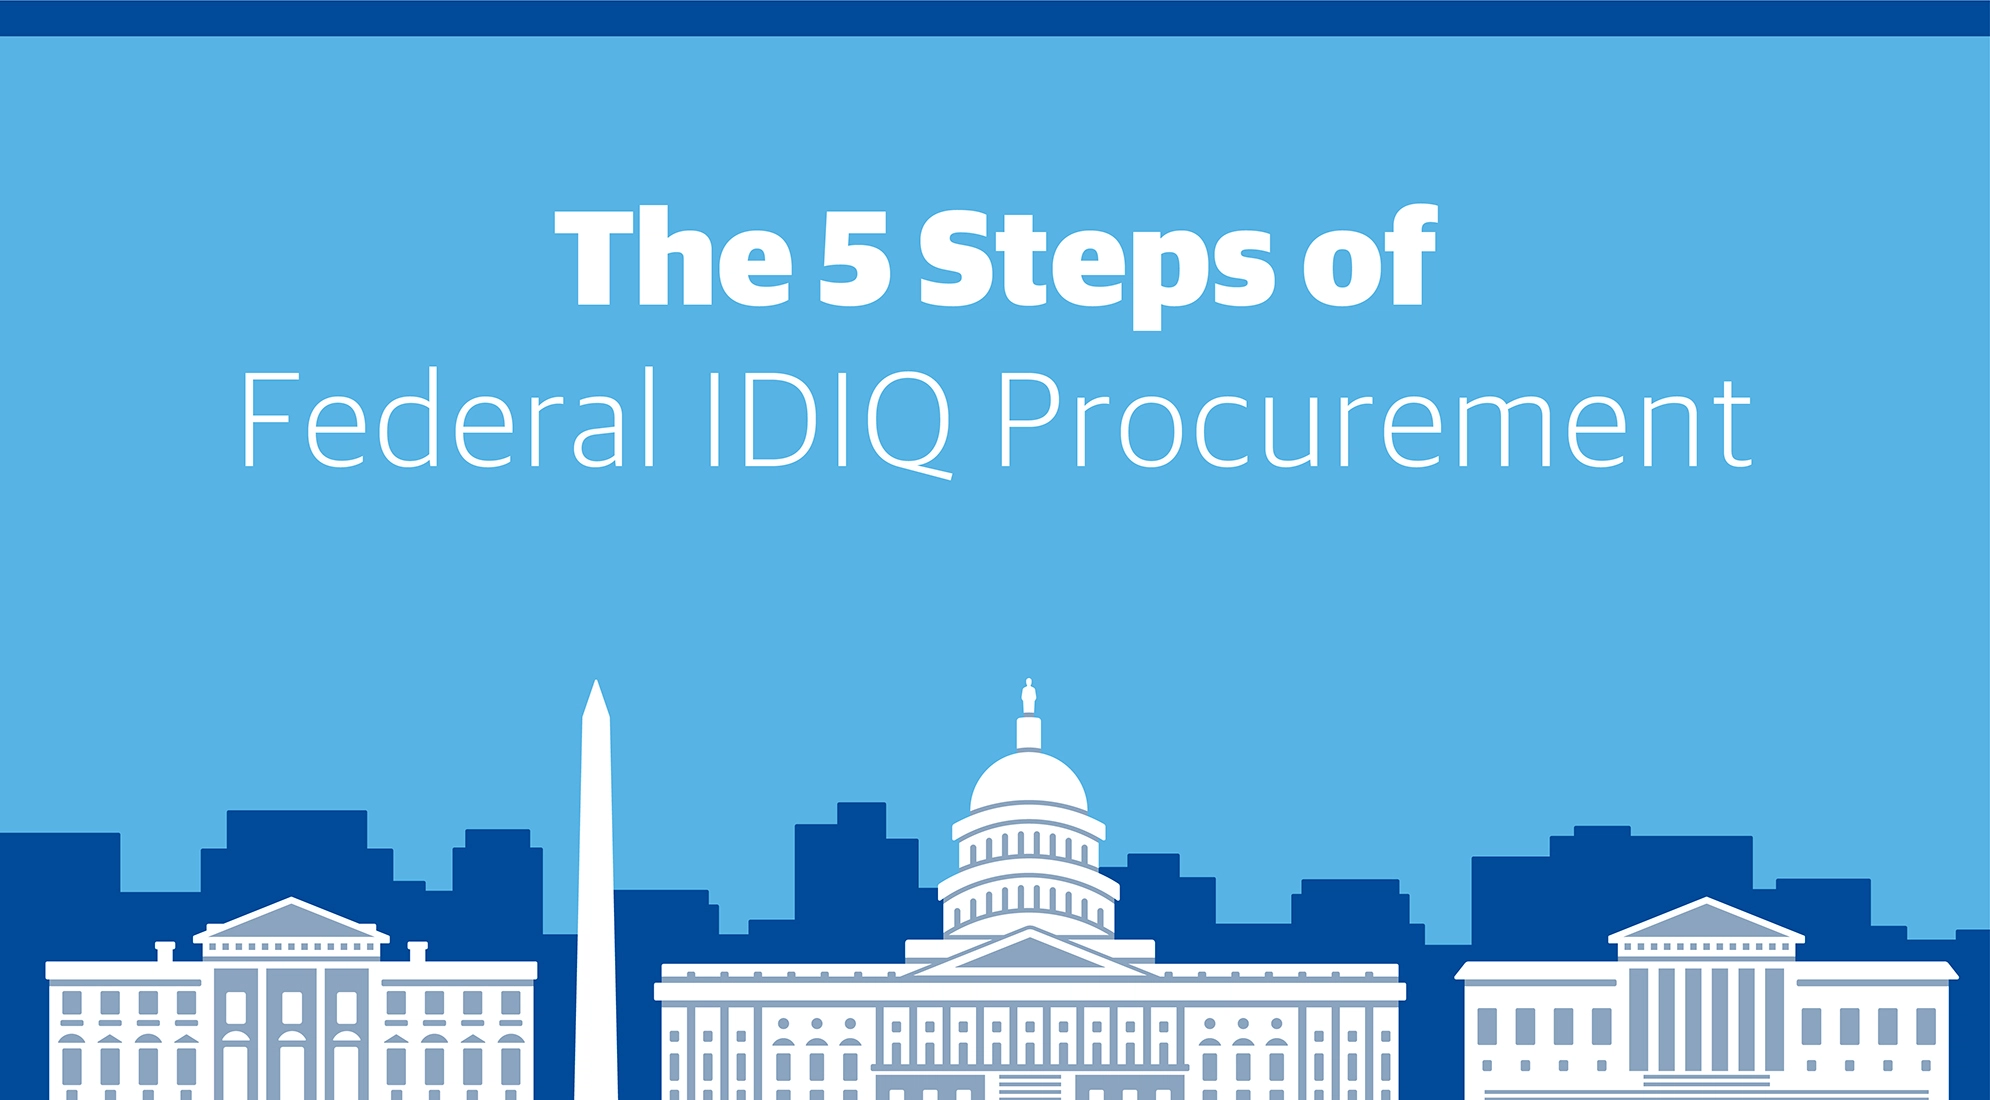 Federal IDIQ Procurement Process